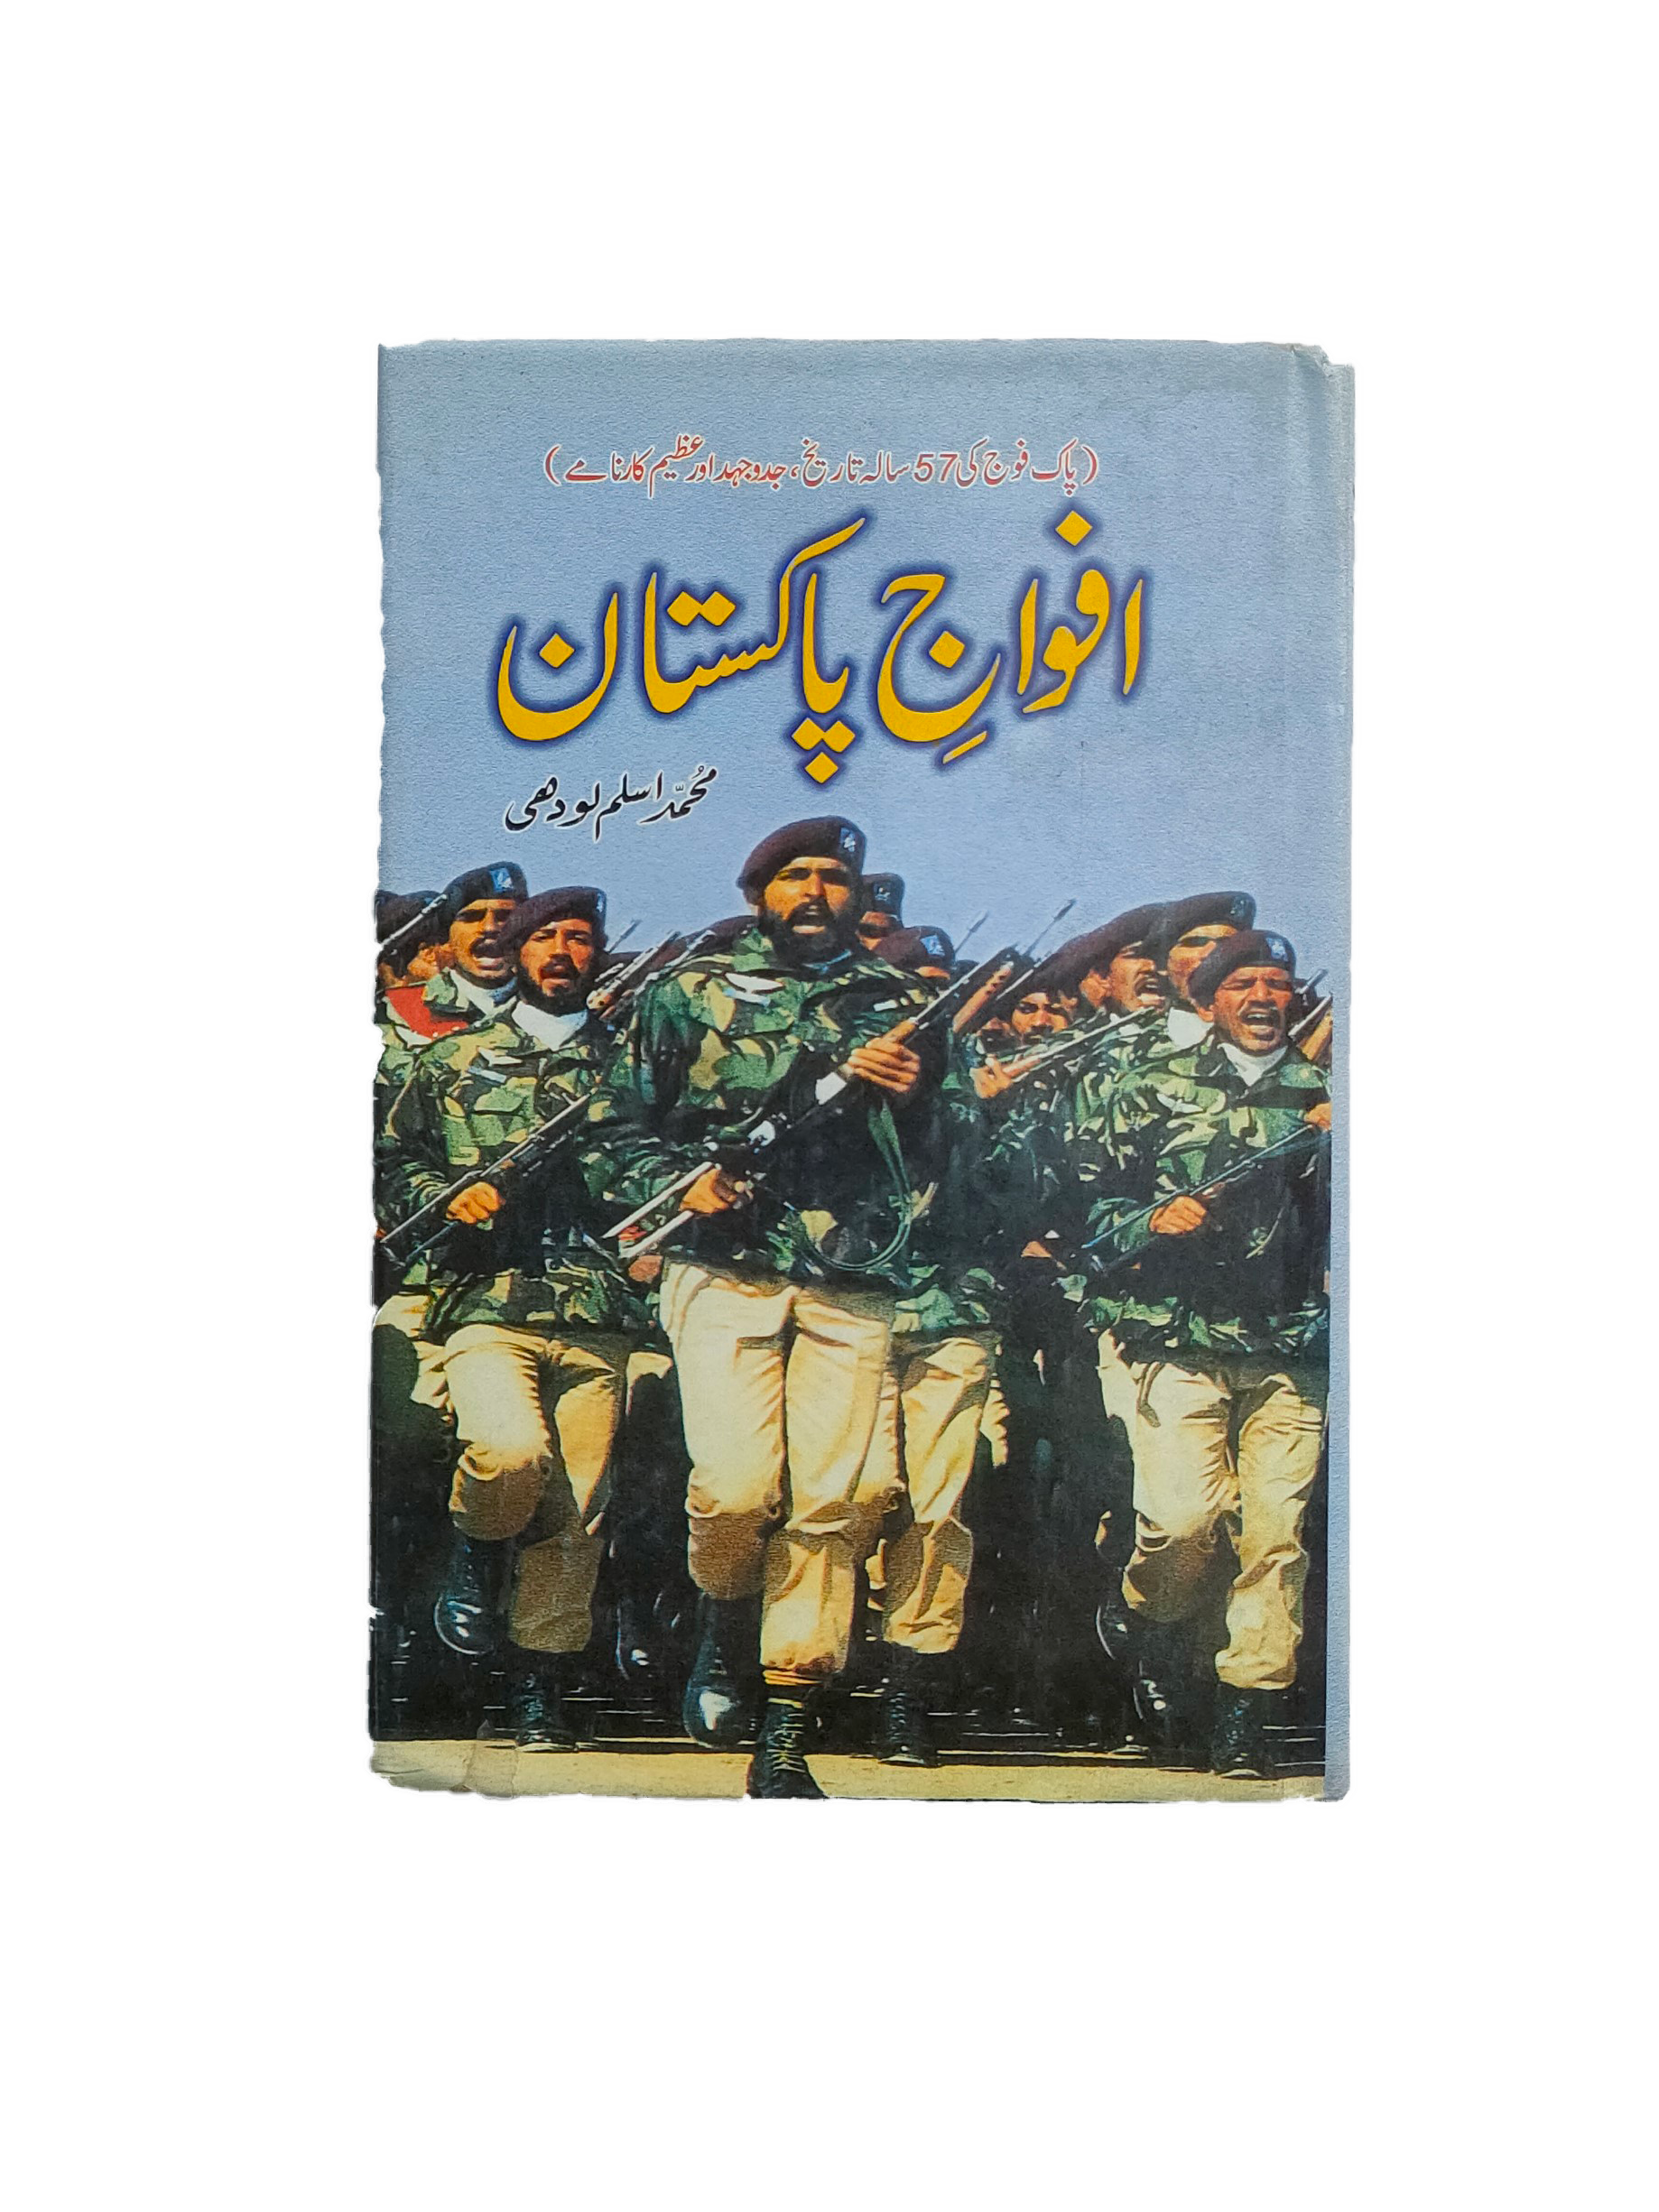 Afwaj-e-Pakistan (The Armed Forces of Pakistan)